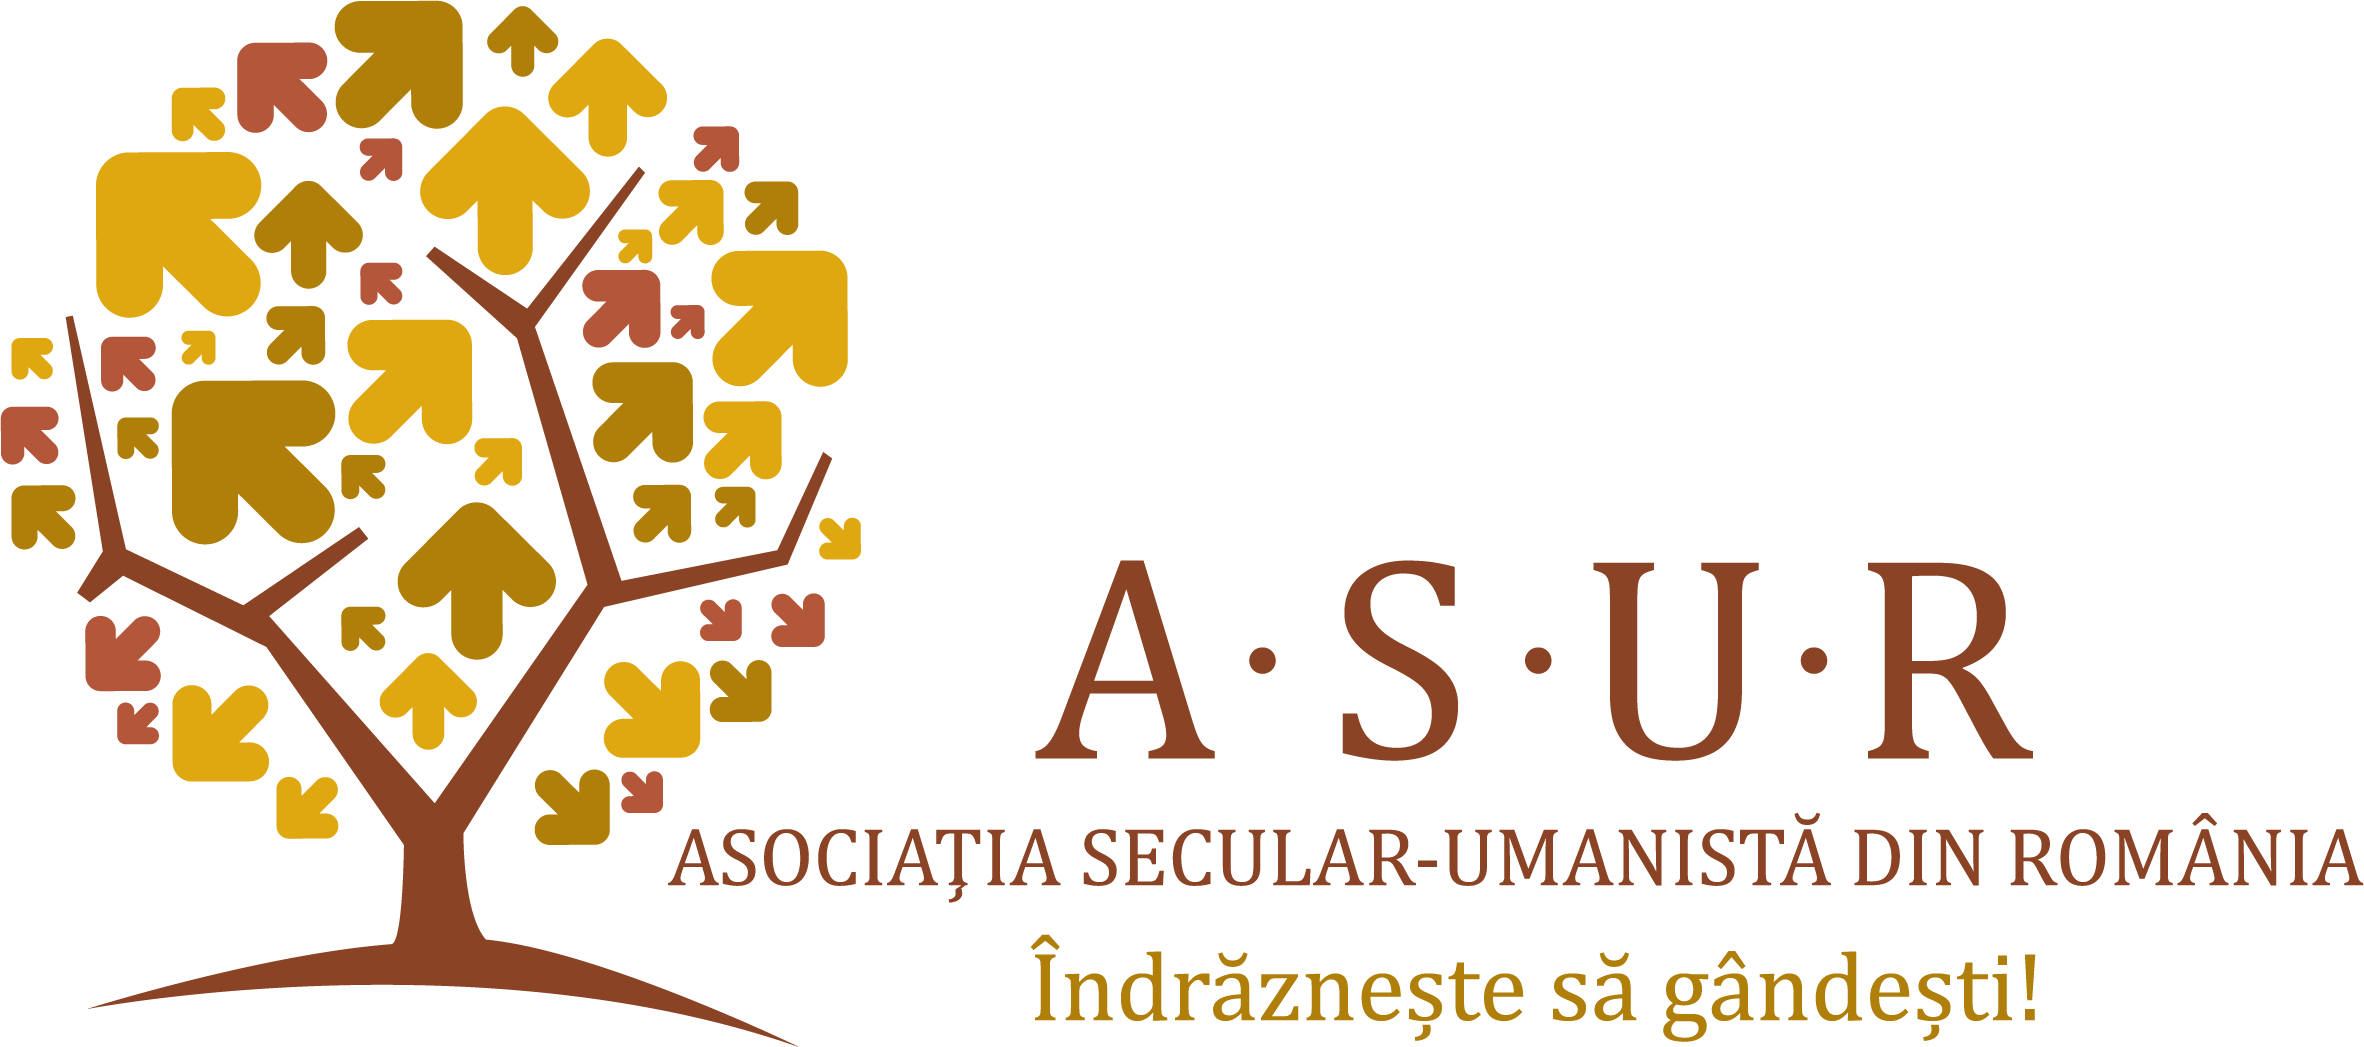 ASUR - Asociatia Secular-Umanista din Romania logo